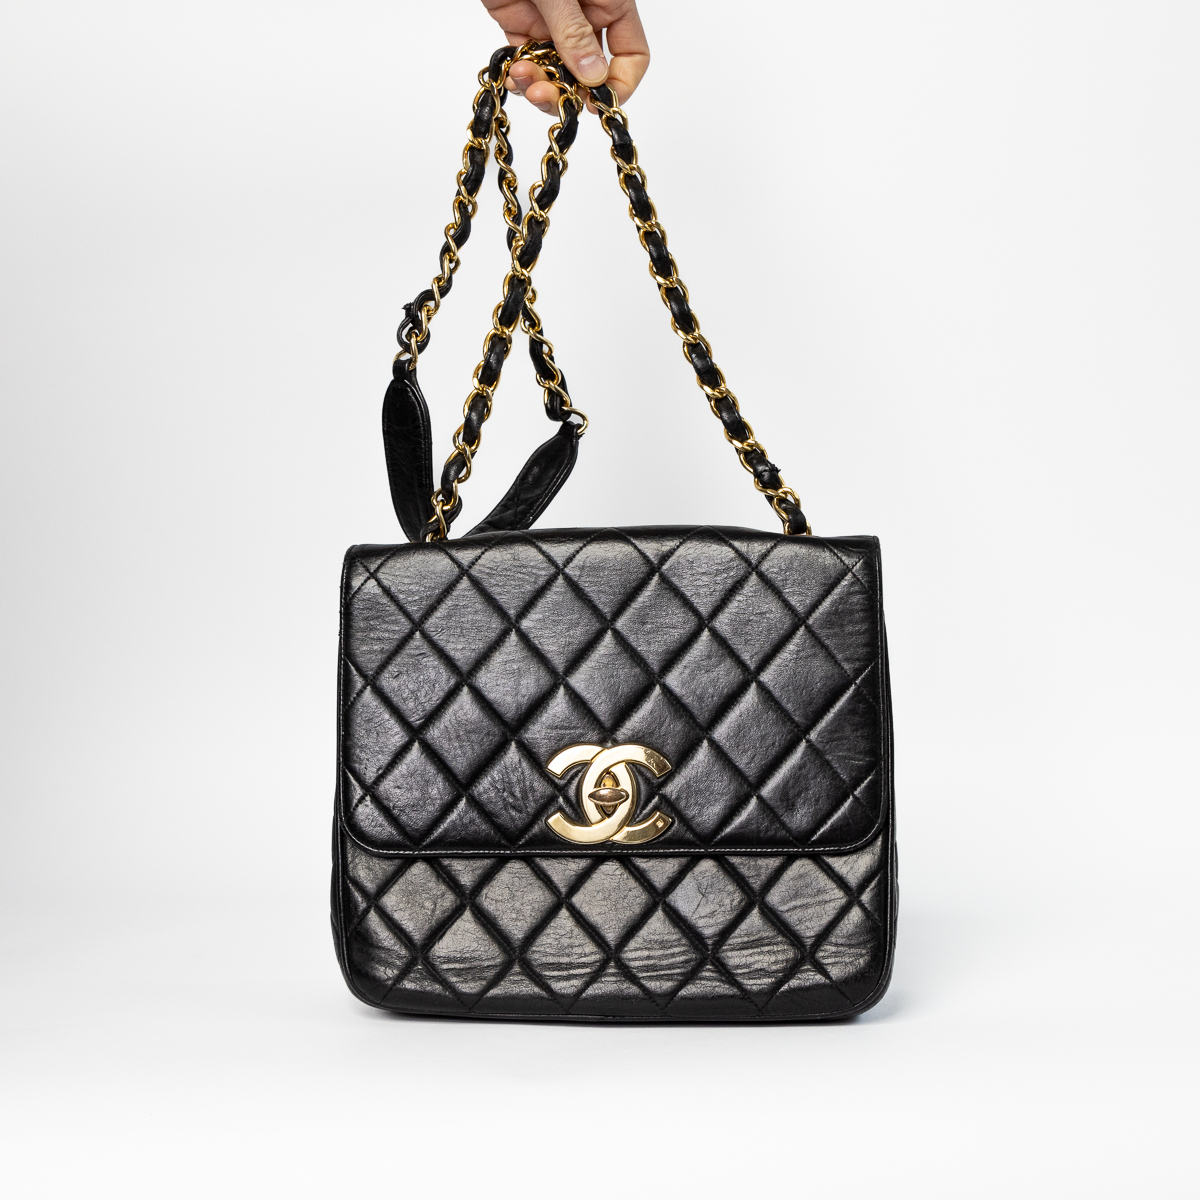 Chanel Single Flap Vintage CC Bag Black